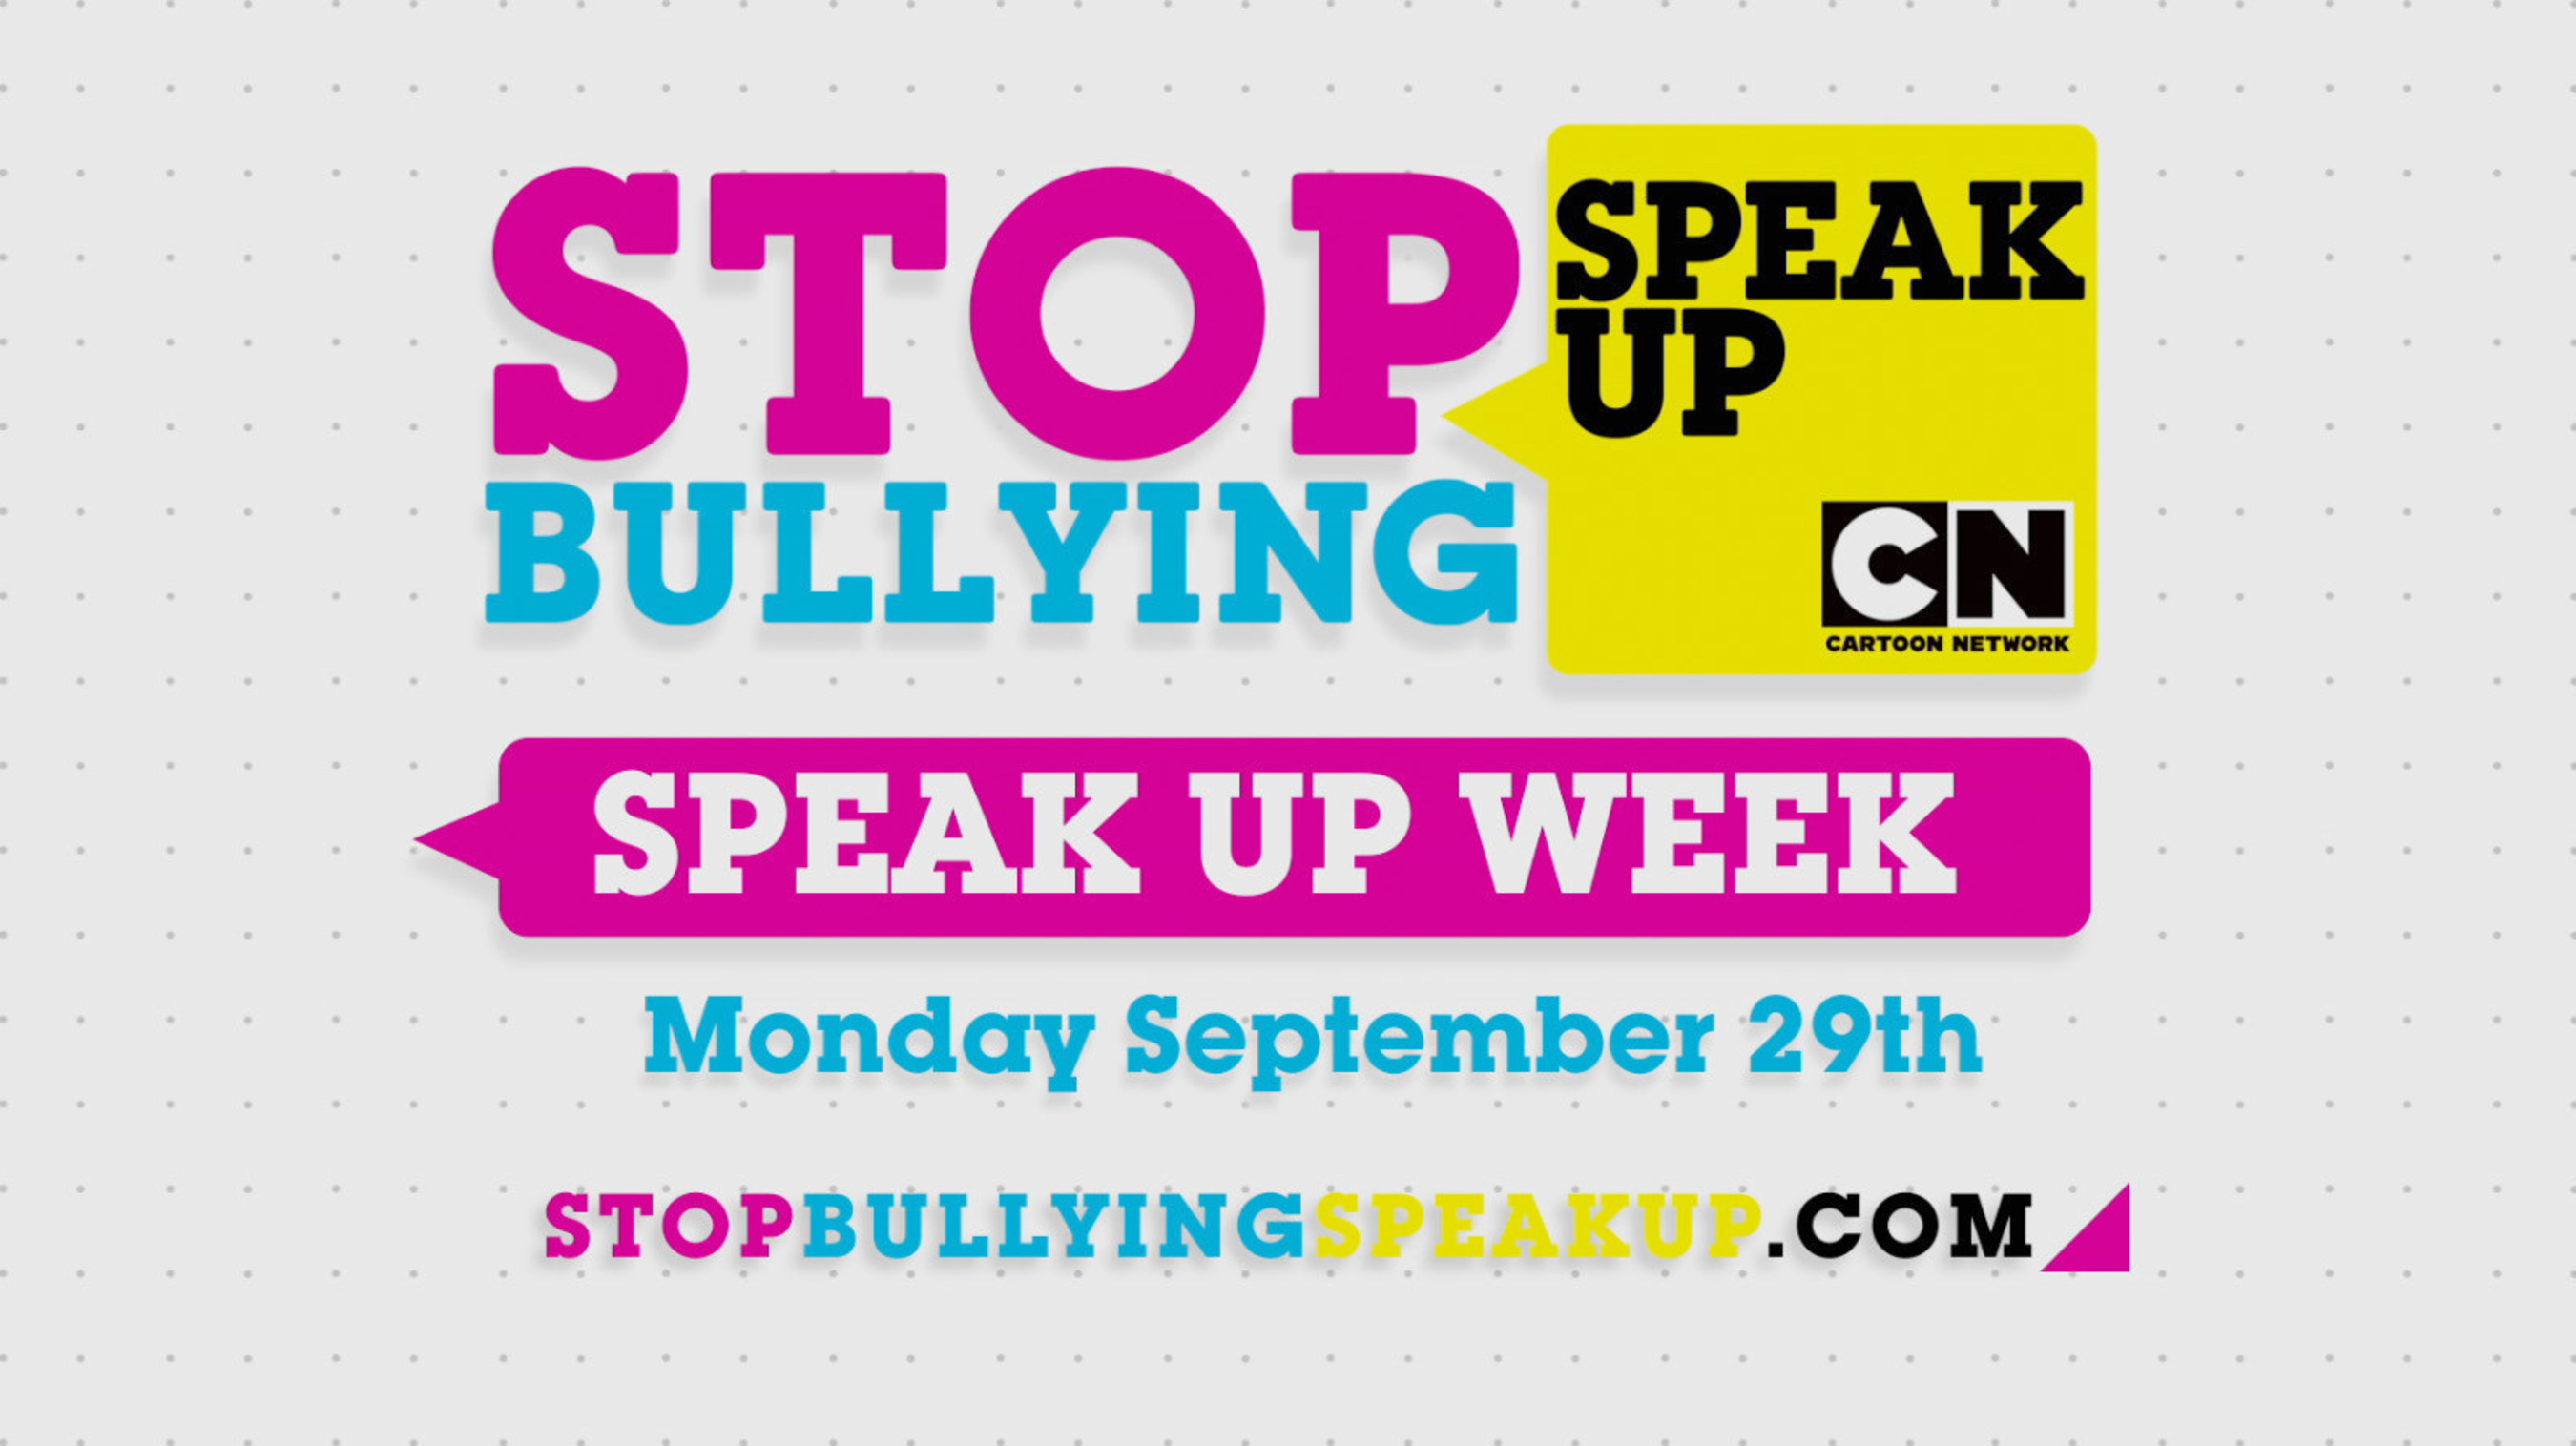 Картон нетворк буллинг. Bullying speaking. Week up. Speak up.